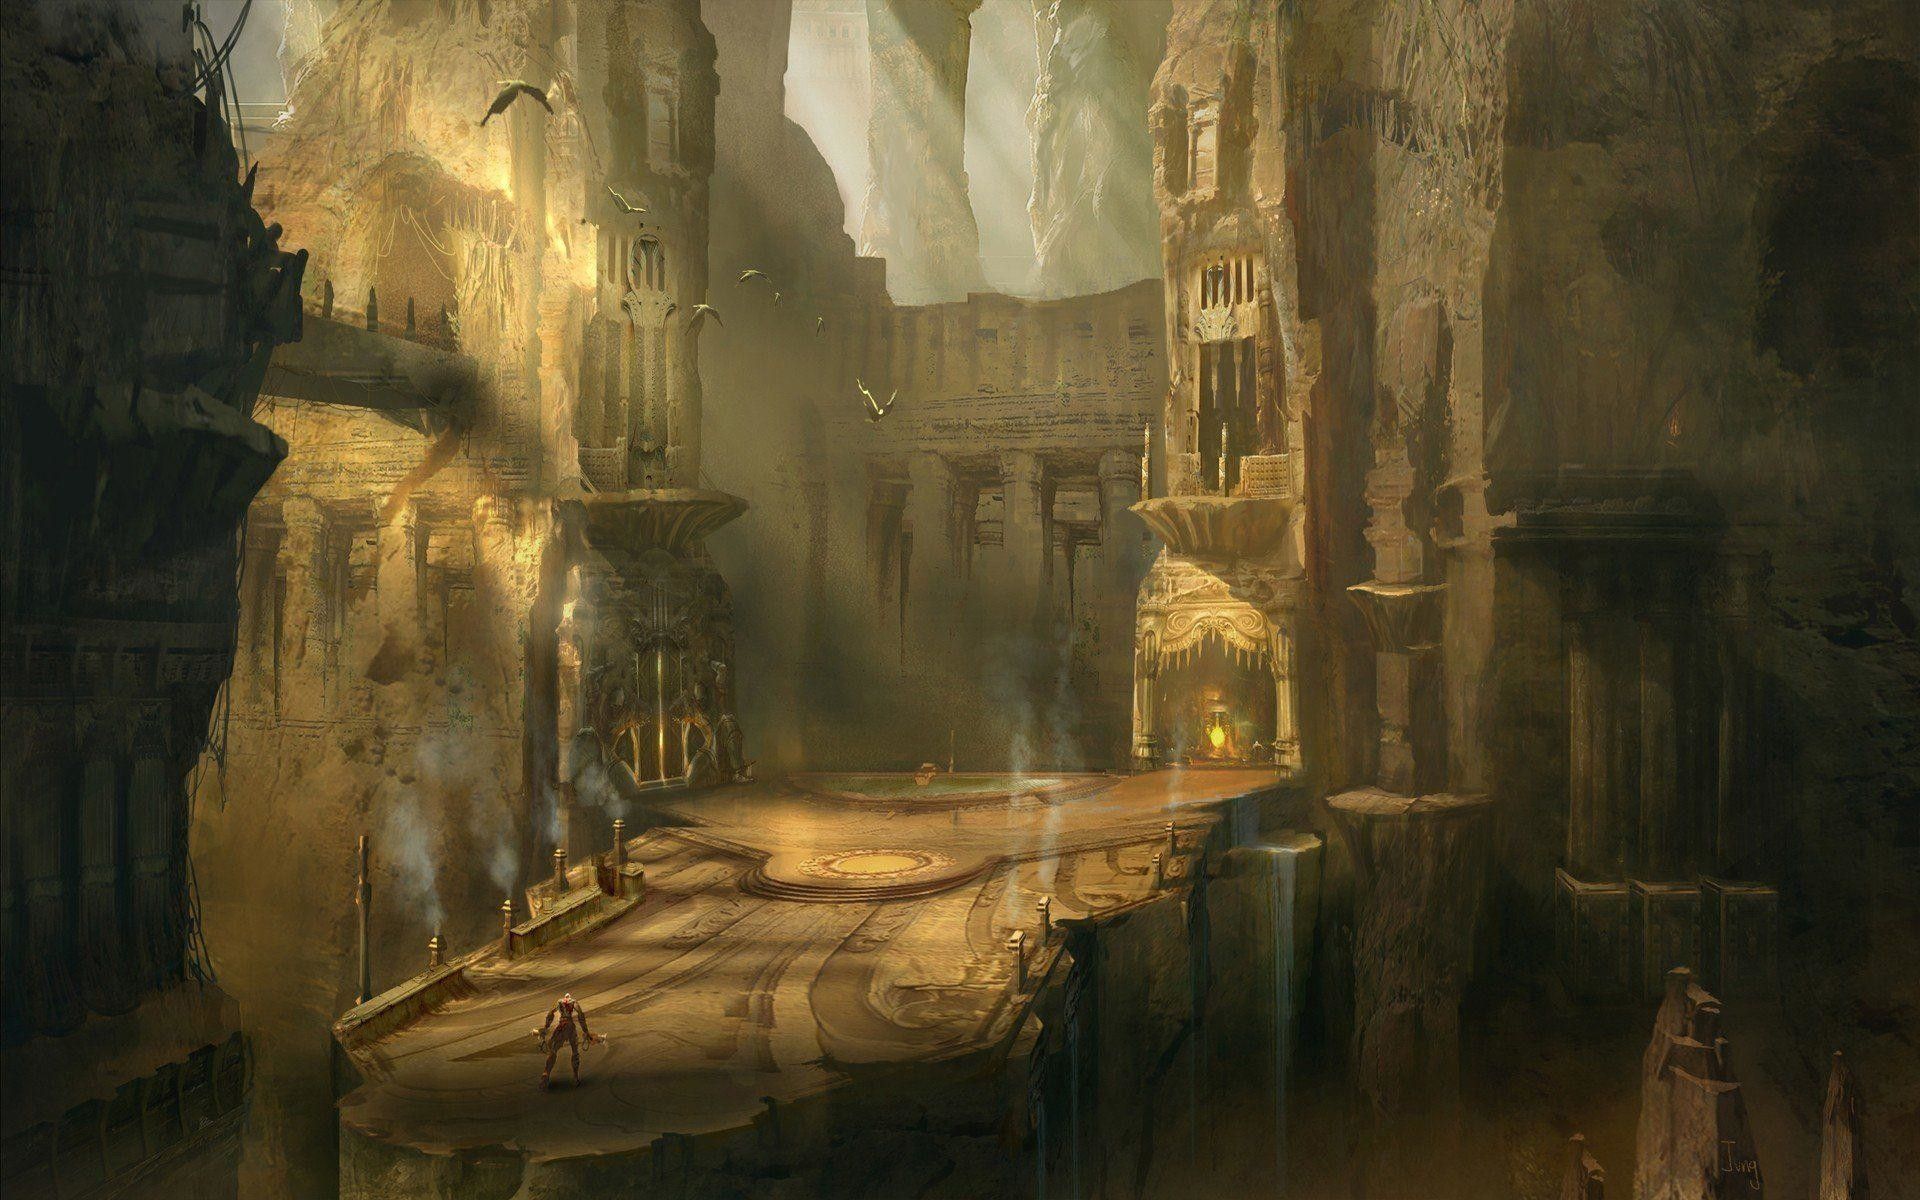 The Last Guardian concept art shows a beautiful, ancient city - Greek mythology